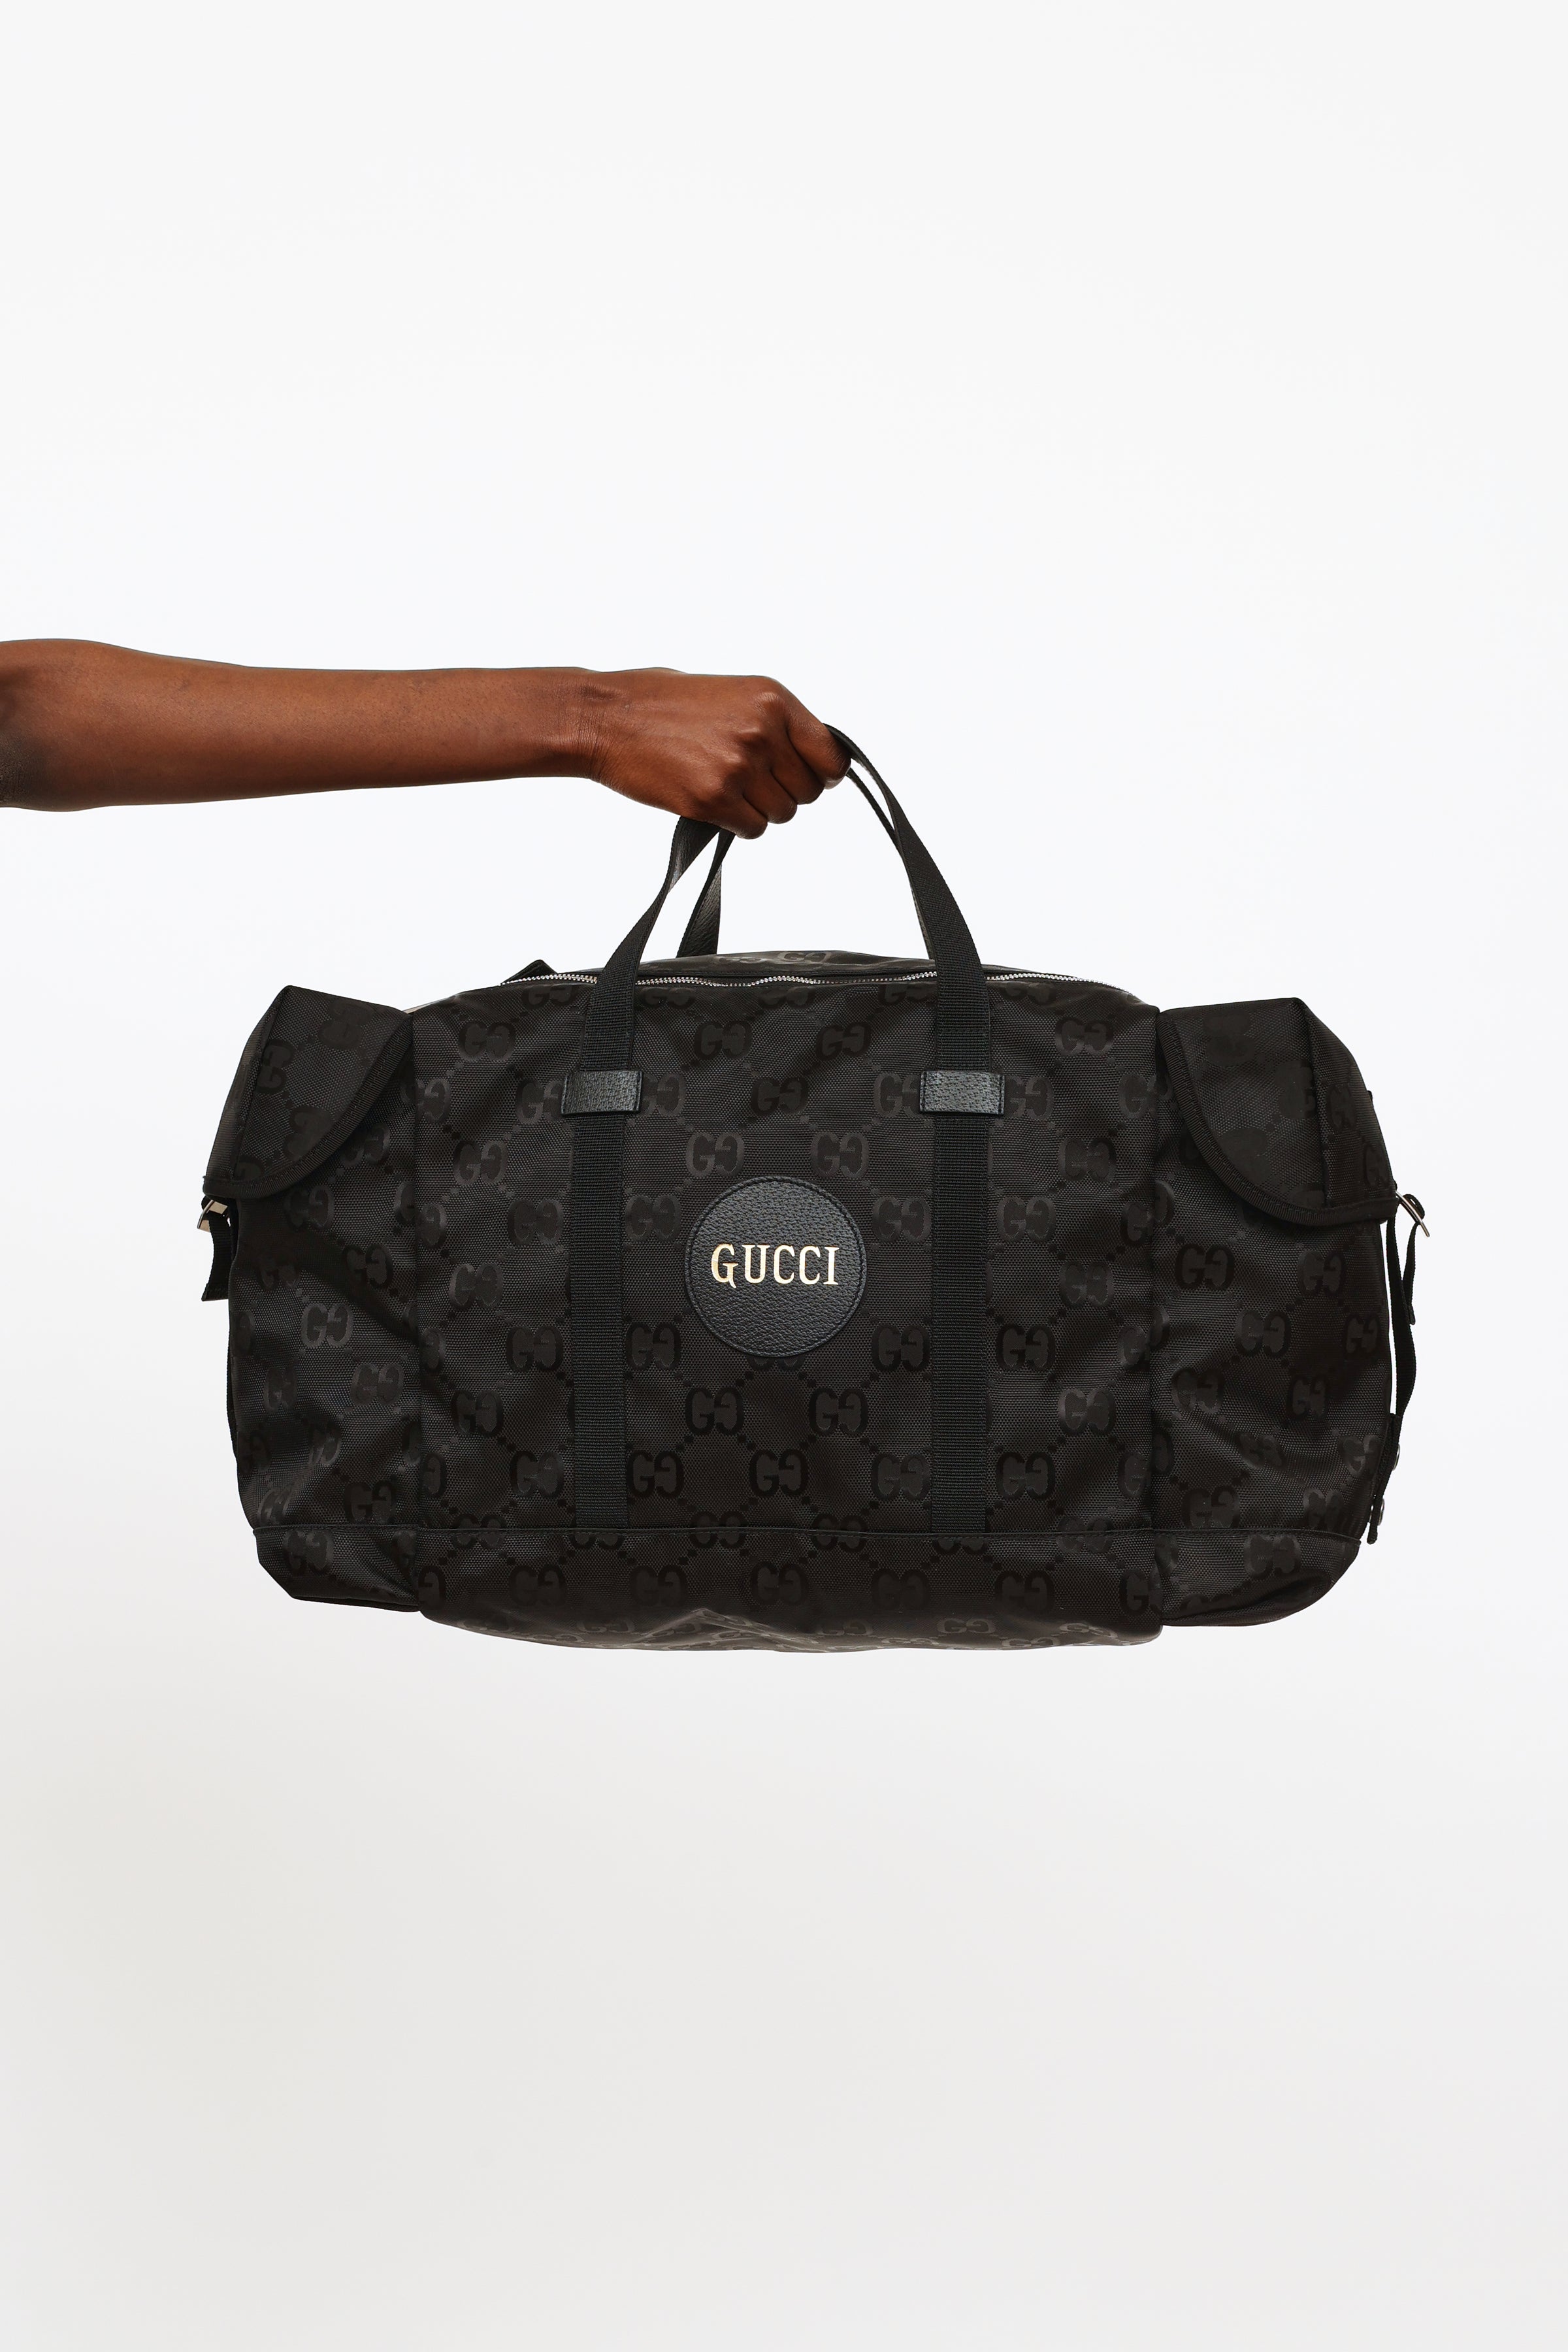 Gucci Limited Edition Off the Grid Monogram Crossbody Bag